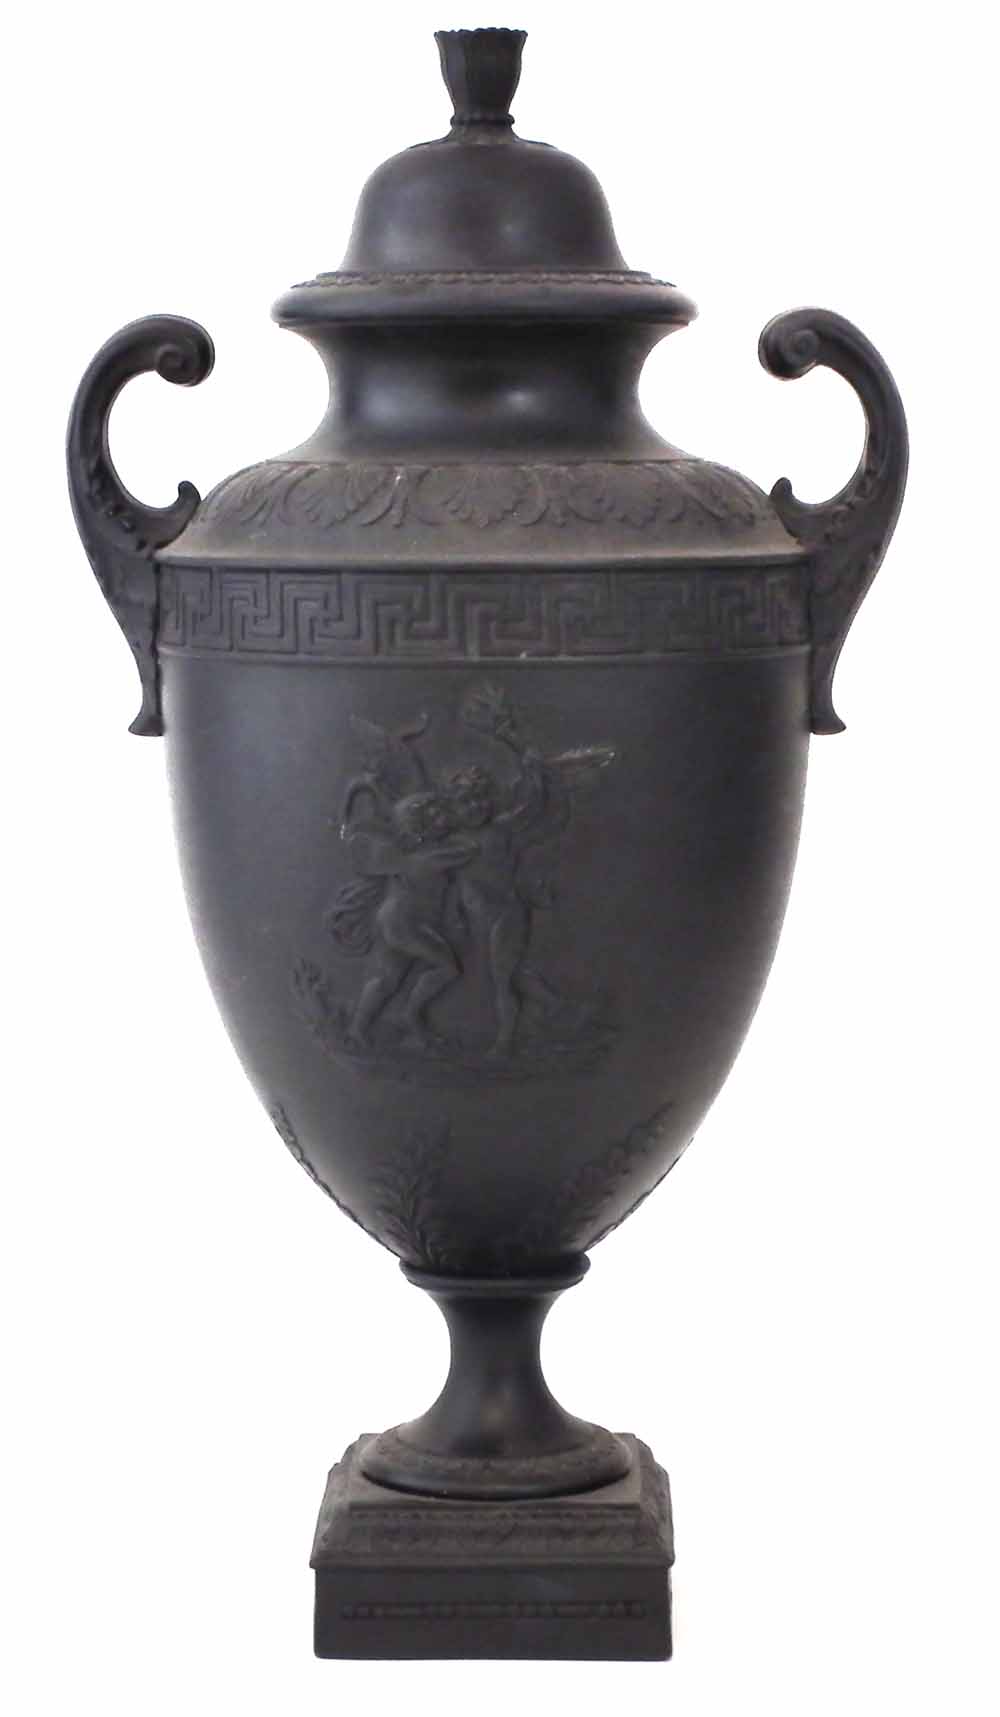 Wedgwood and Bentley black basalt vase circa 1770 moulded with cherubs between borders of palms, - Image 2 of 21